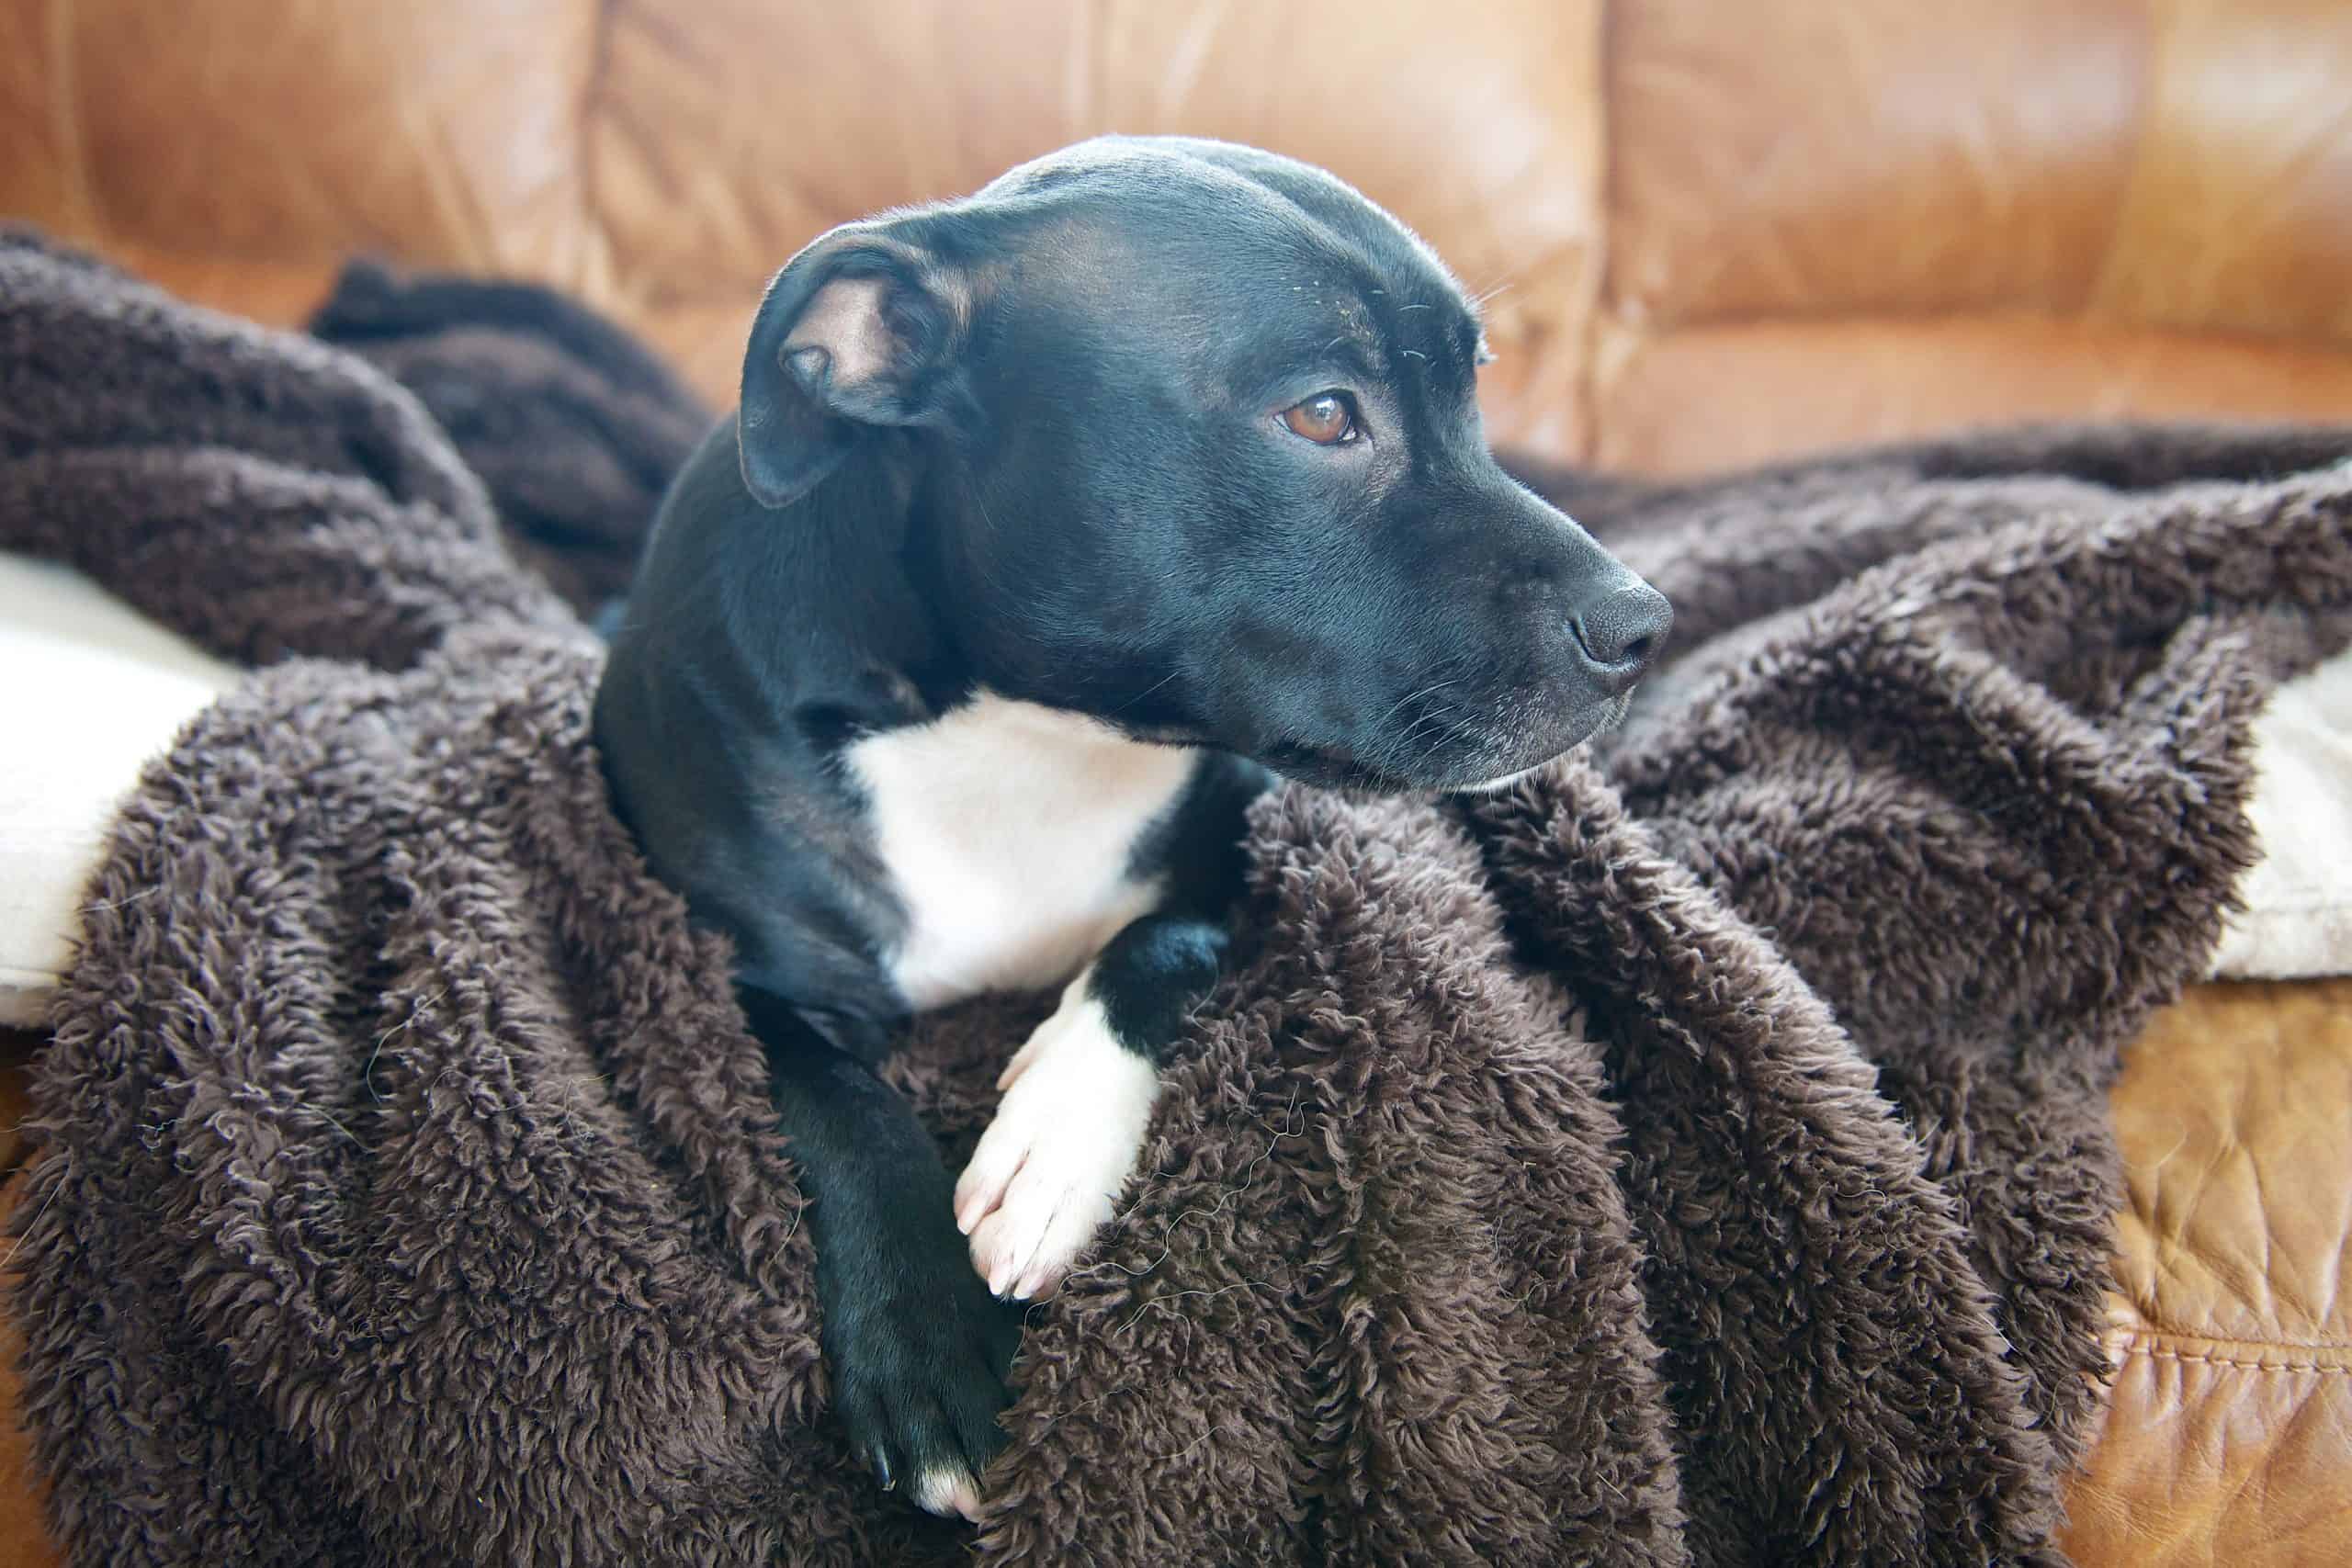 the dog sucks on the blanket